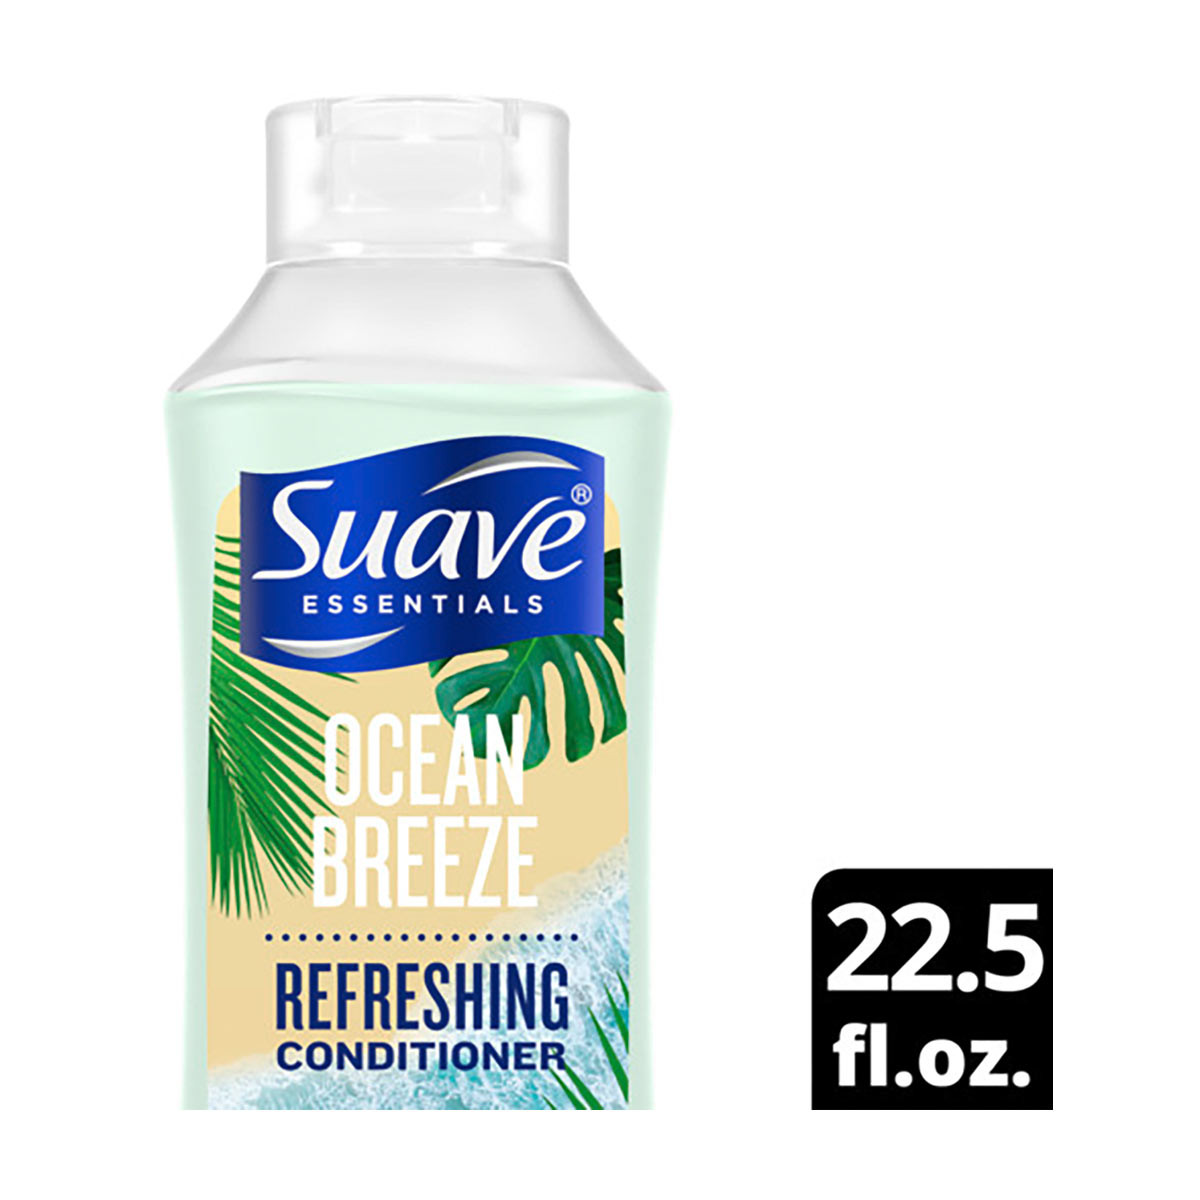 Suave Essentials Ocean Breeze Refreshing Conditioner, 22.5 fl oz